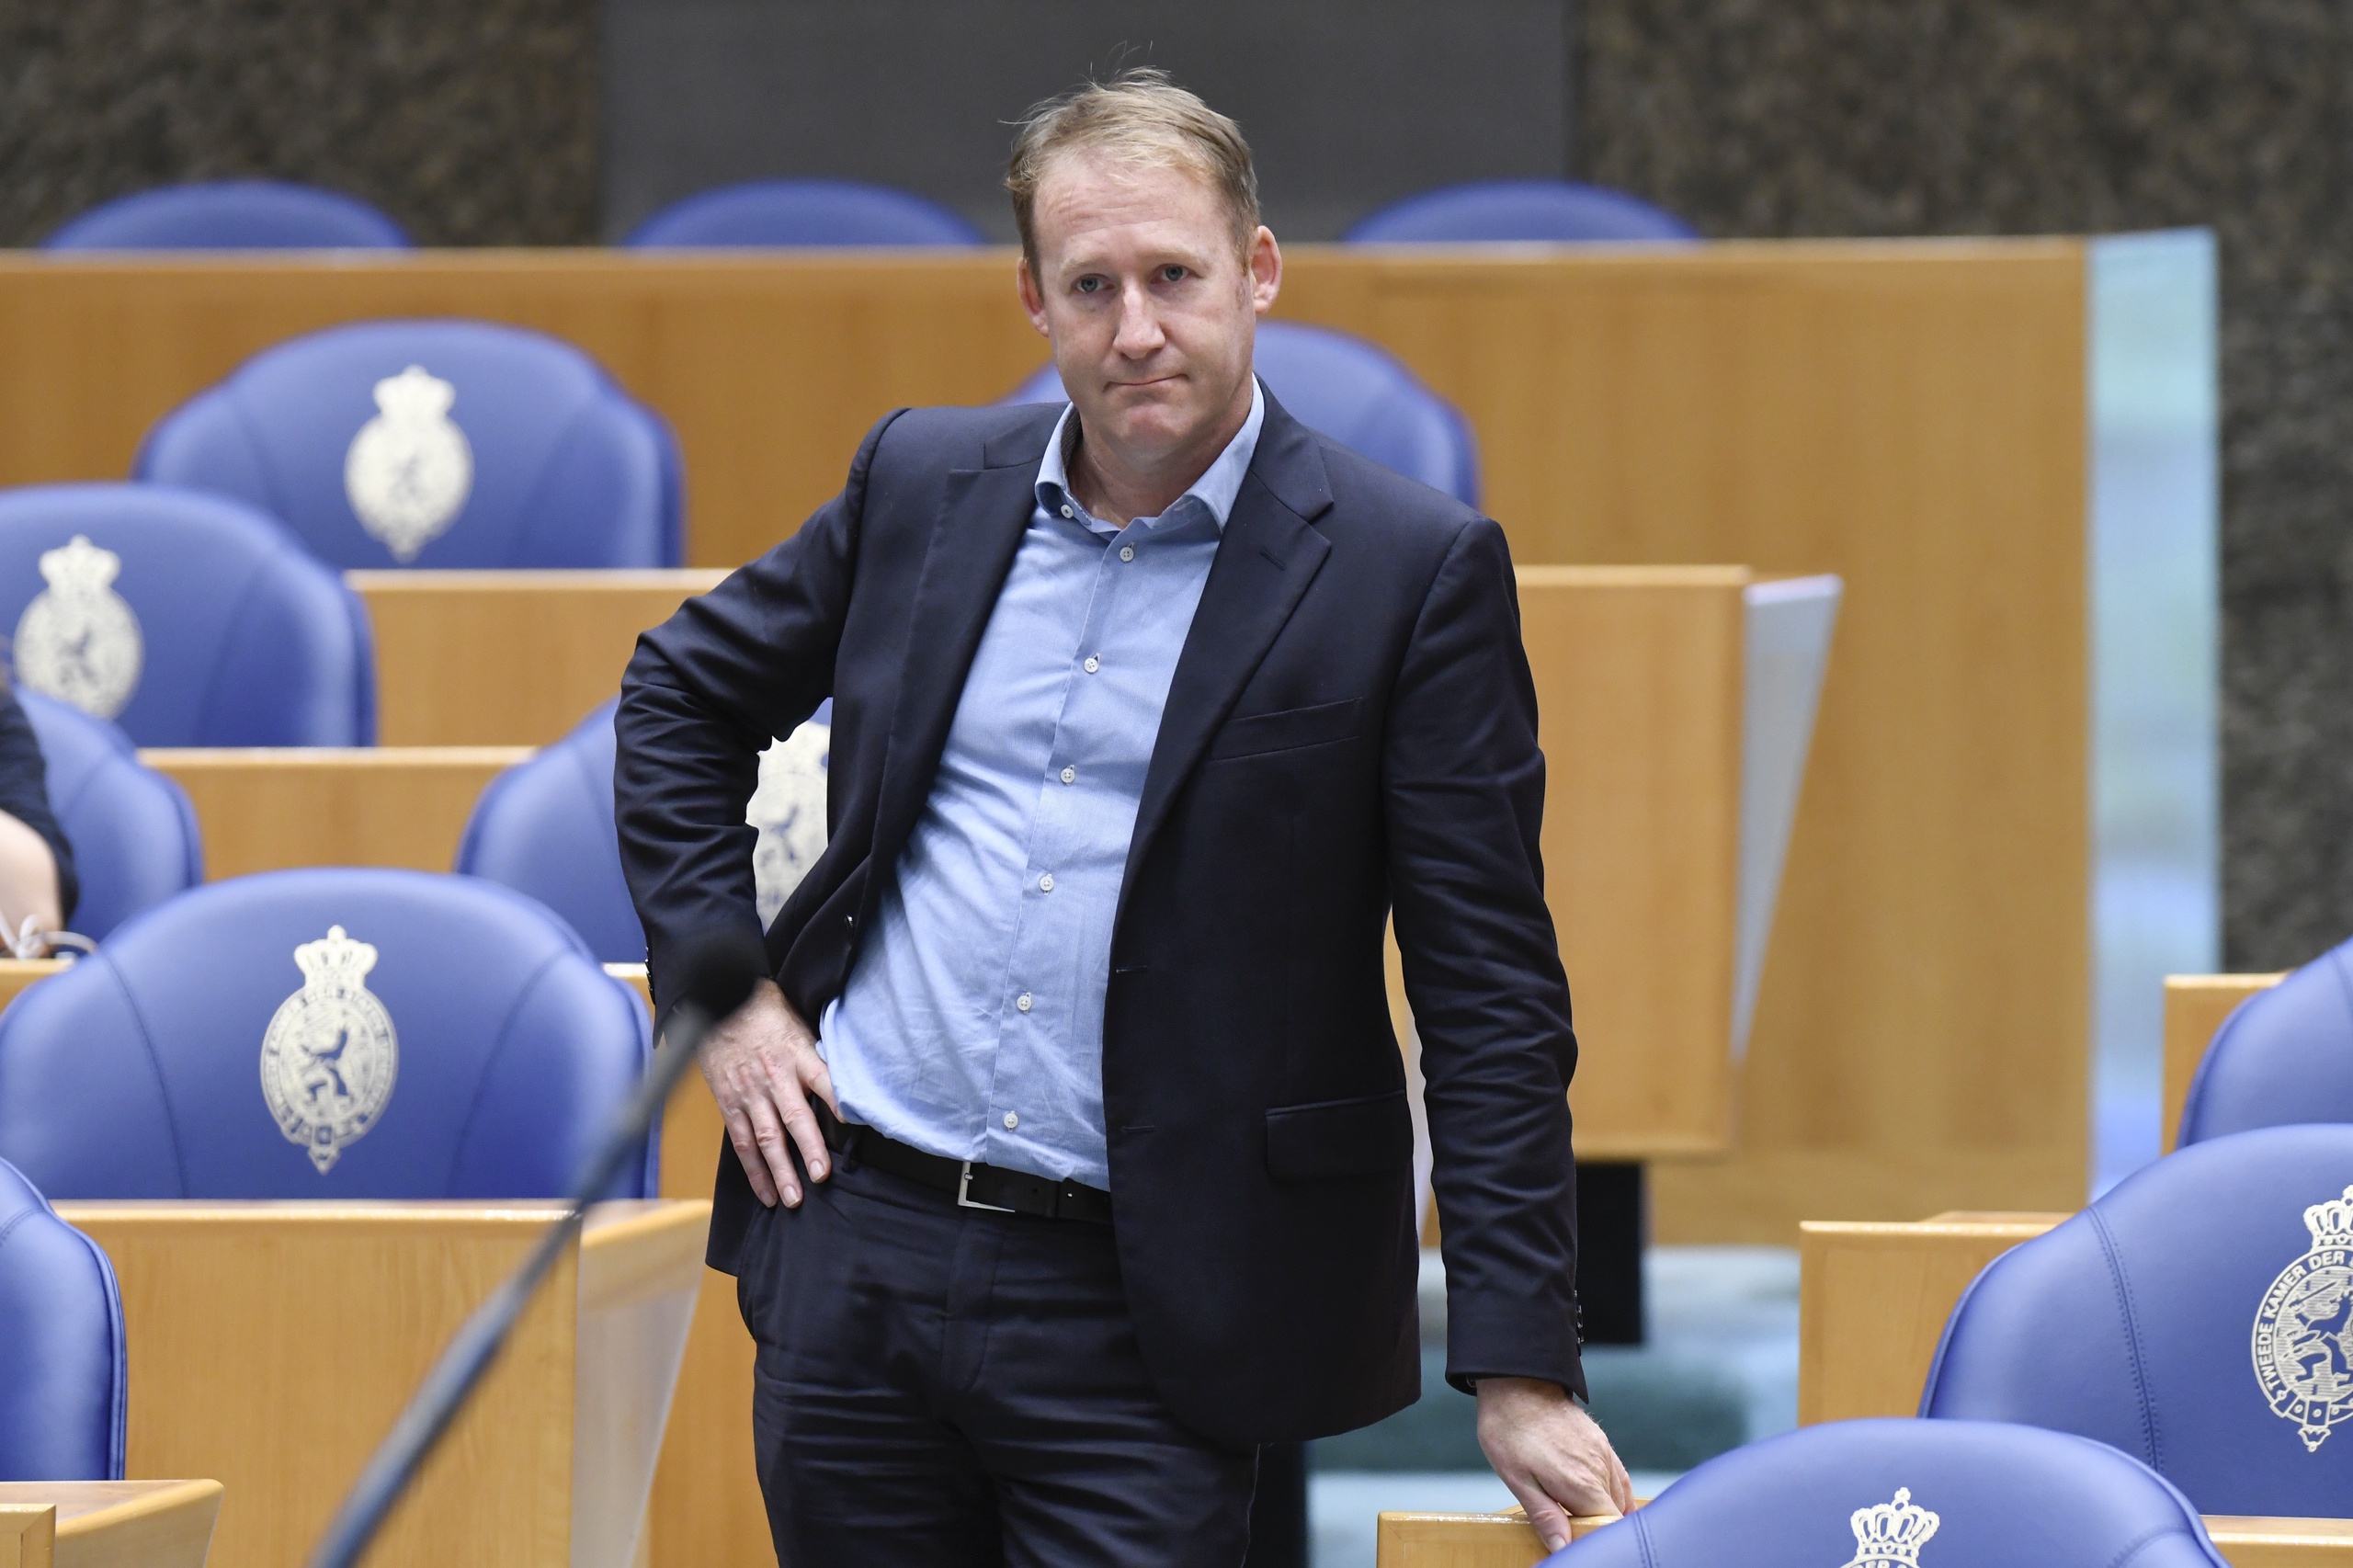 Former D66 Member of Parliament Kees Verhoeven.